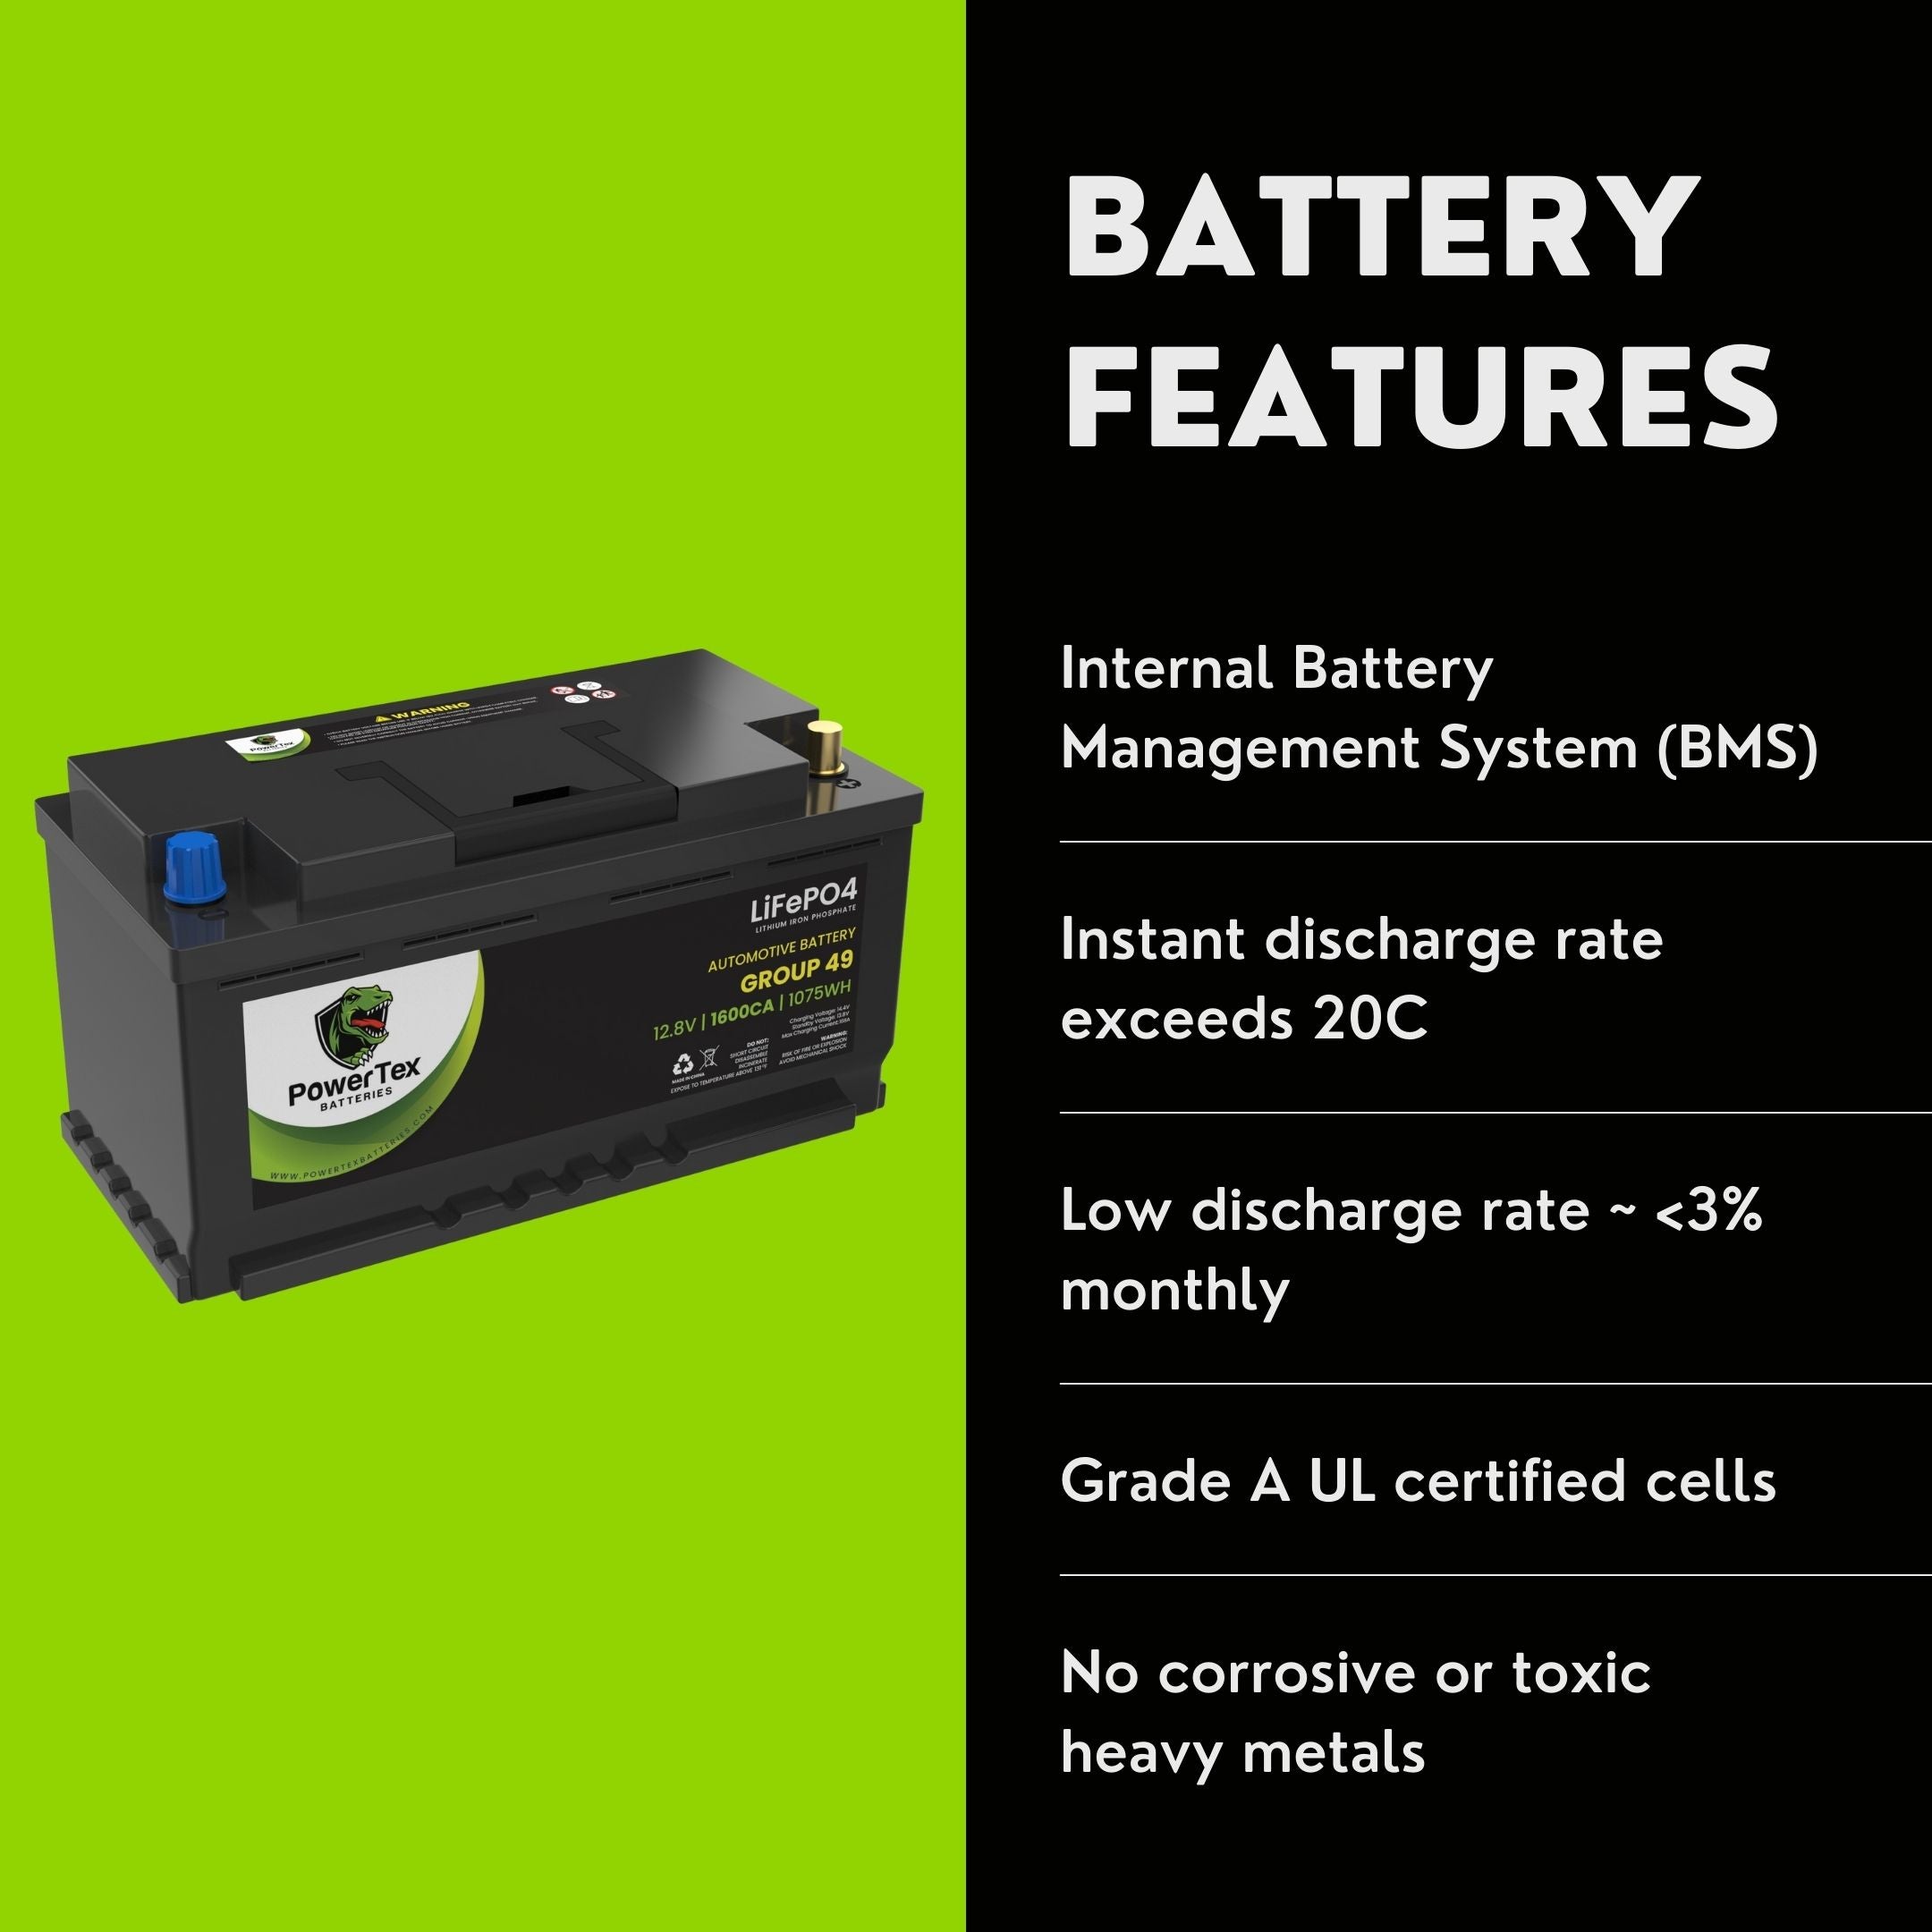 2012 Aston Martin Virage Car Batteries BCI Group 49 / H8 Lithium LiFePO4 Automotive Battery